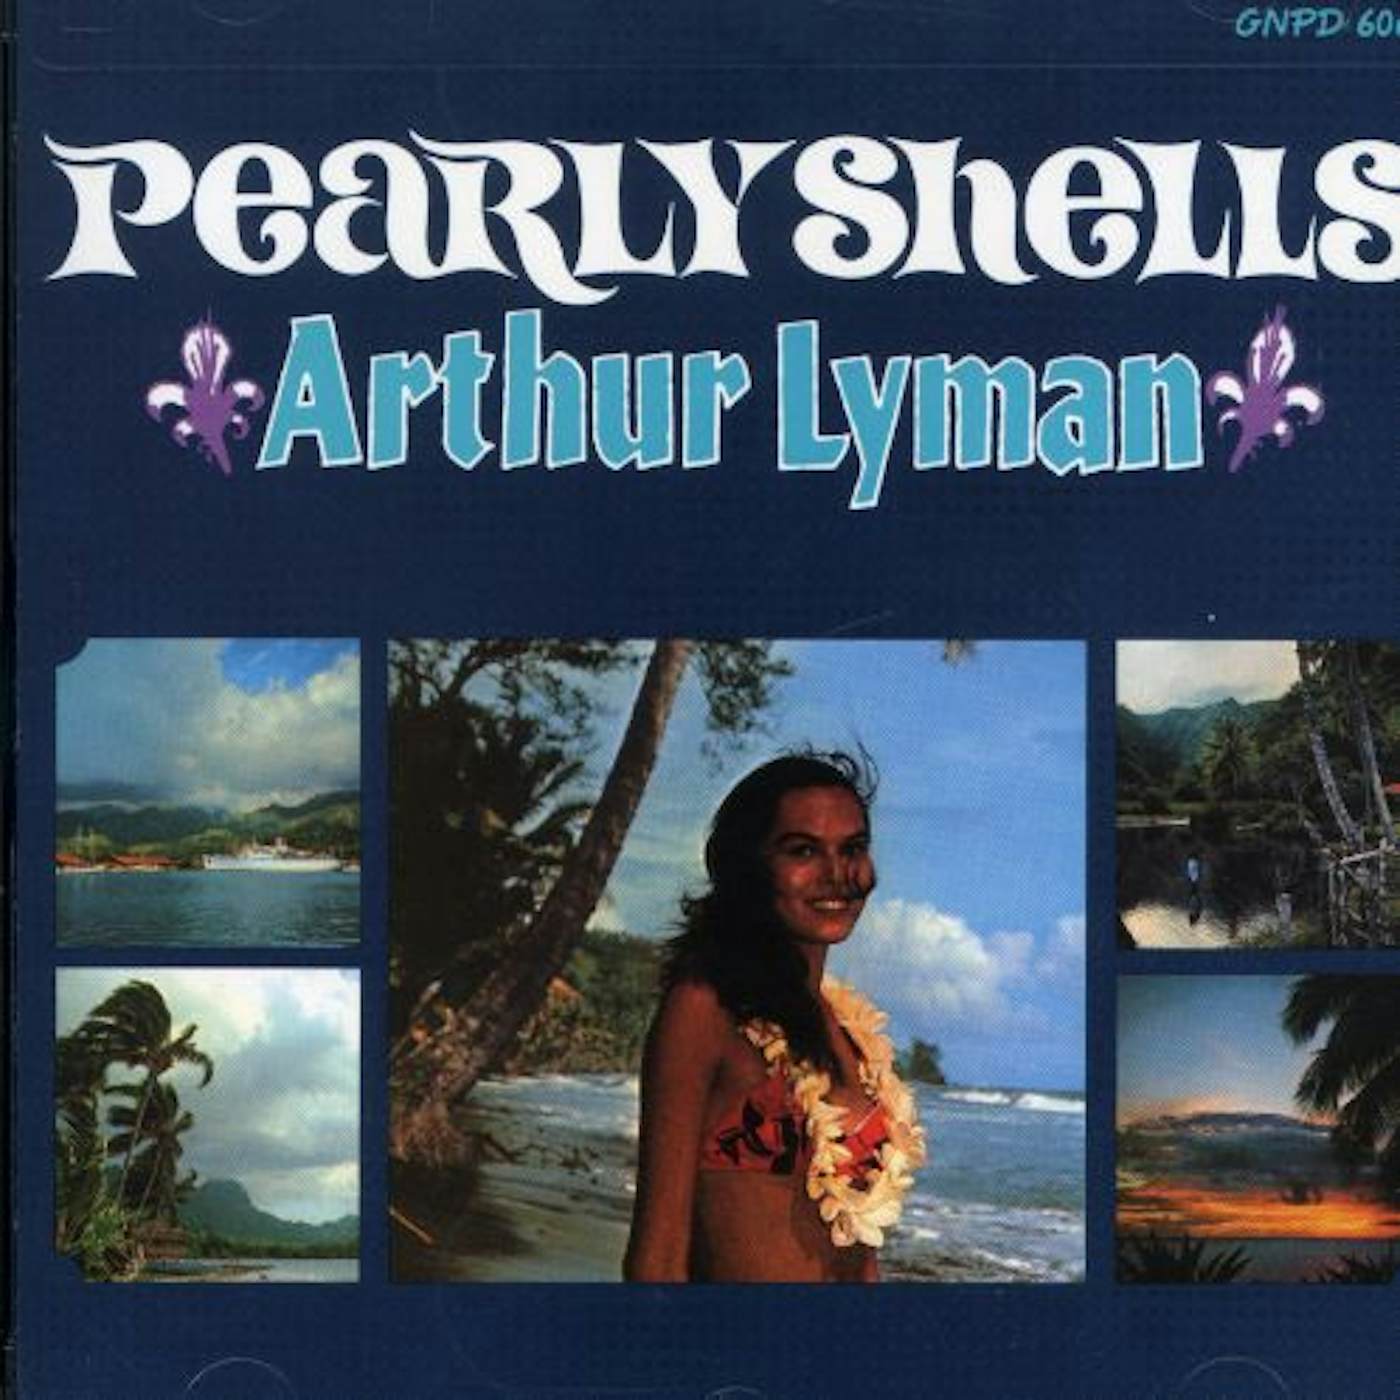 Arthur Lyman PEARLY SHELLS CD